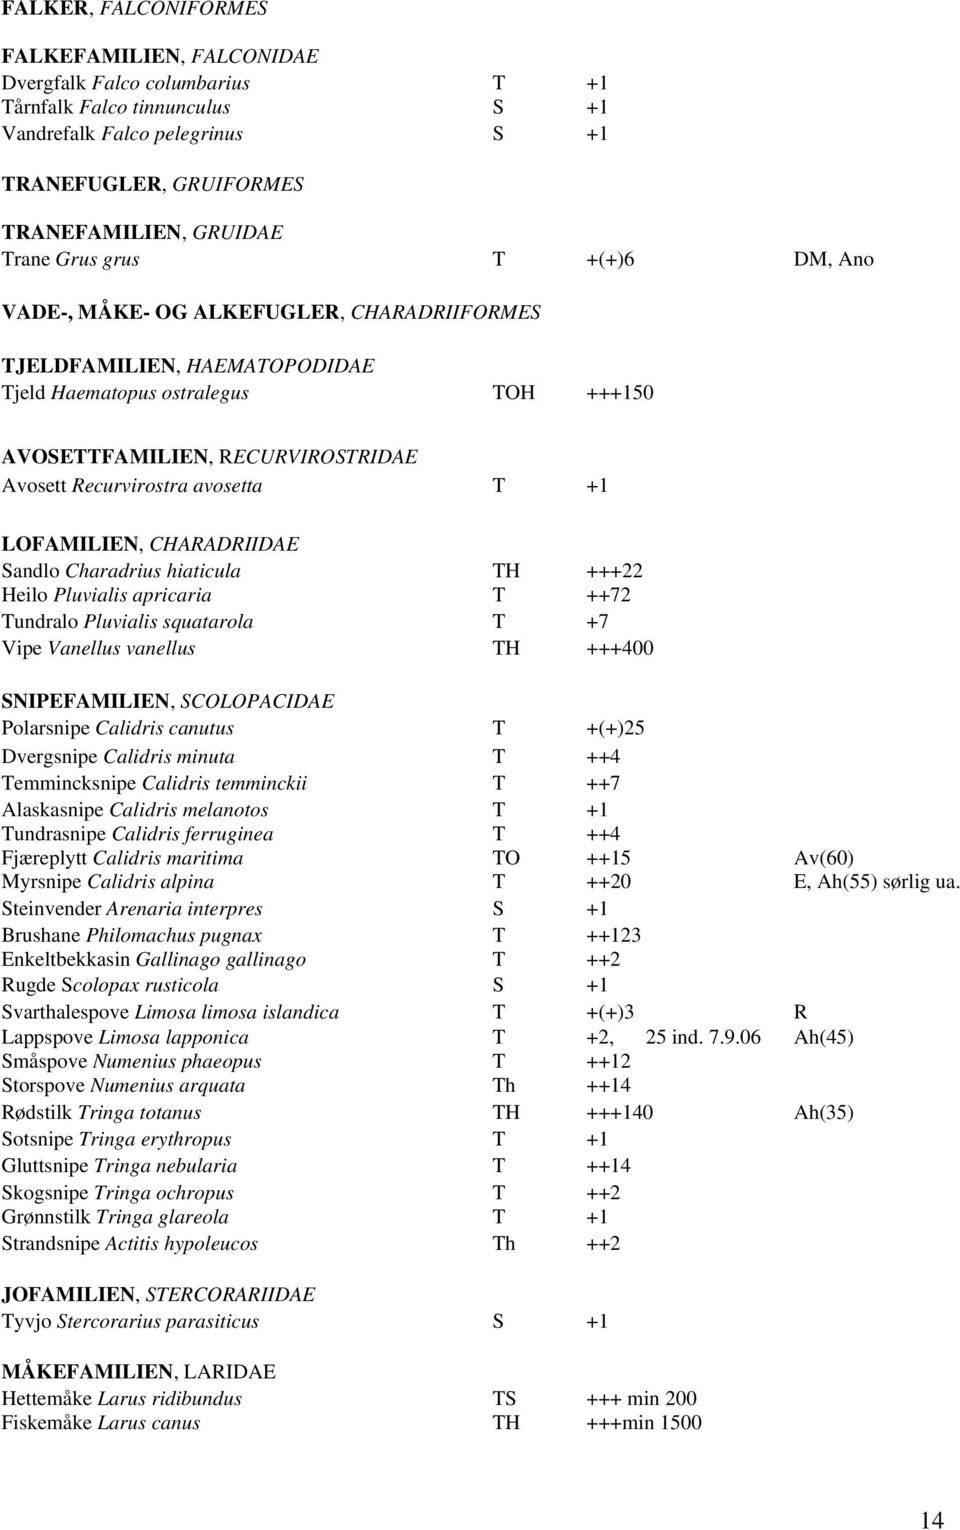 avosetta T +1 LOFAMILIEN, CHARADRIIDAE Sandlo Charadrius hiaticula TH +++22 Heilo Pluvialis apricaria T ++72 Tundralo Pluvialis squatarola T +7 Vipe Vanellus vanellus TH +++400 SNIPEFAMILIEN,